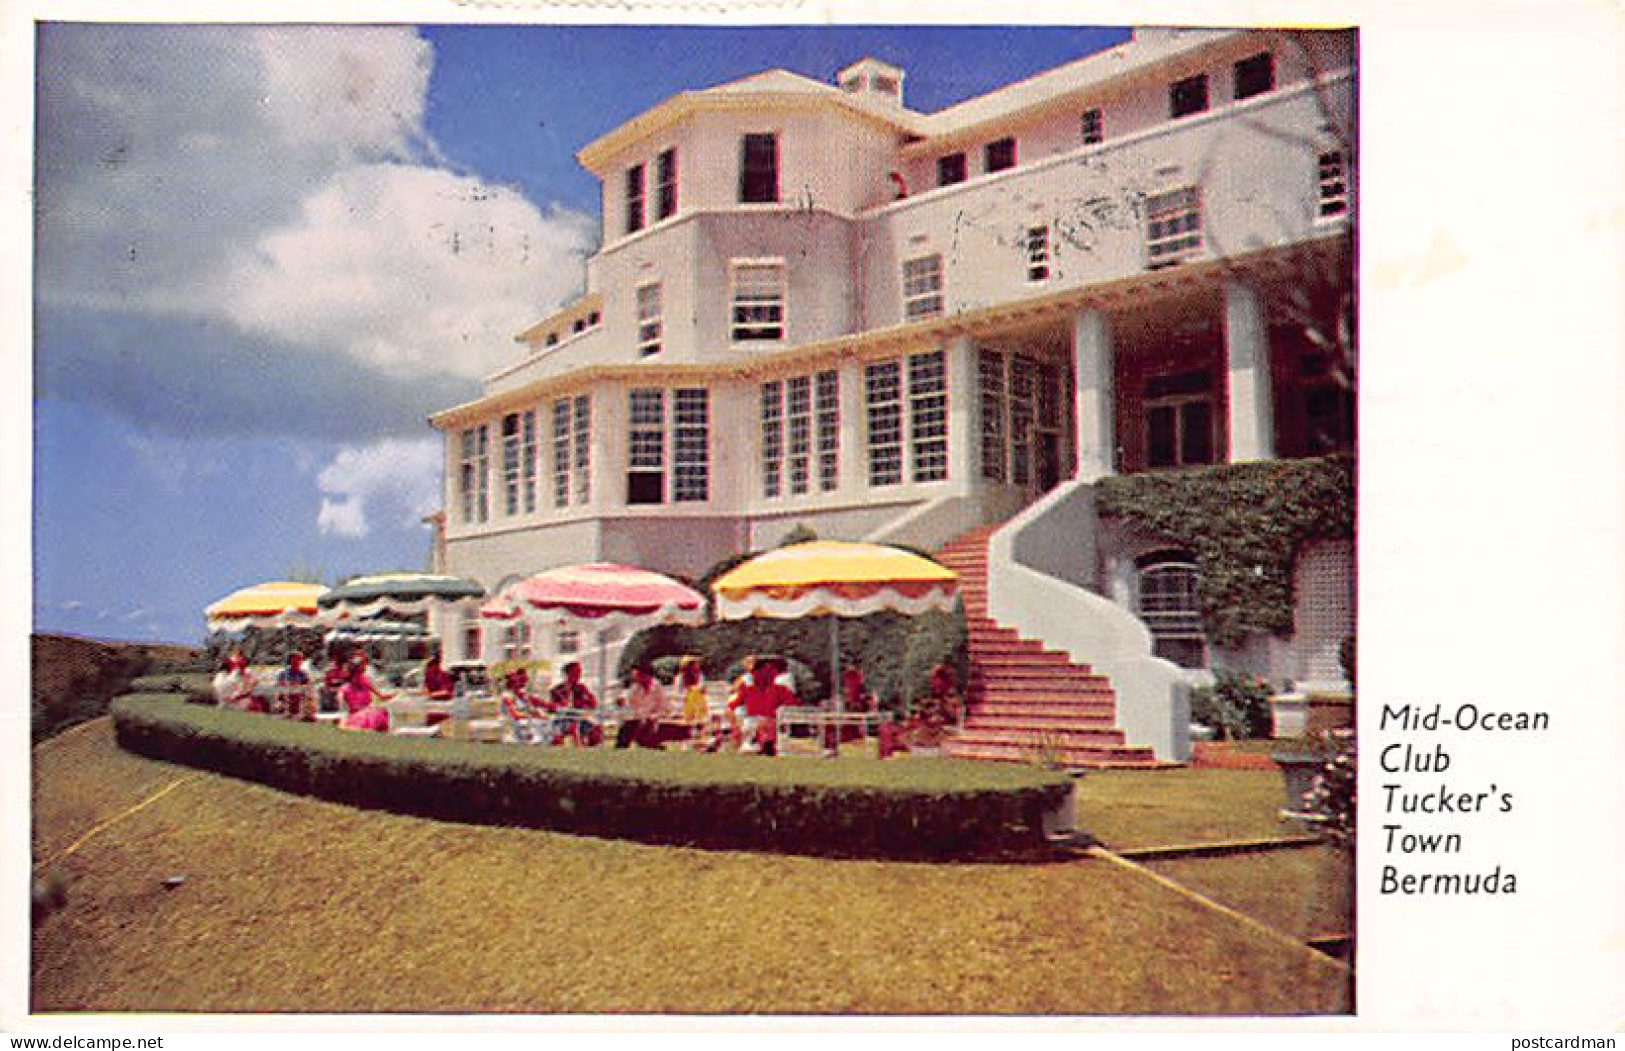 Bermuda - TUCKER'S TOWN - Terrace Of The Mid-Ocean Club - Publ. Mid-Ocean Club 2 - Bermudes